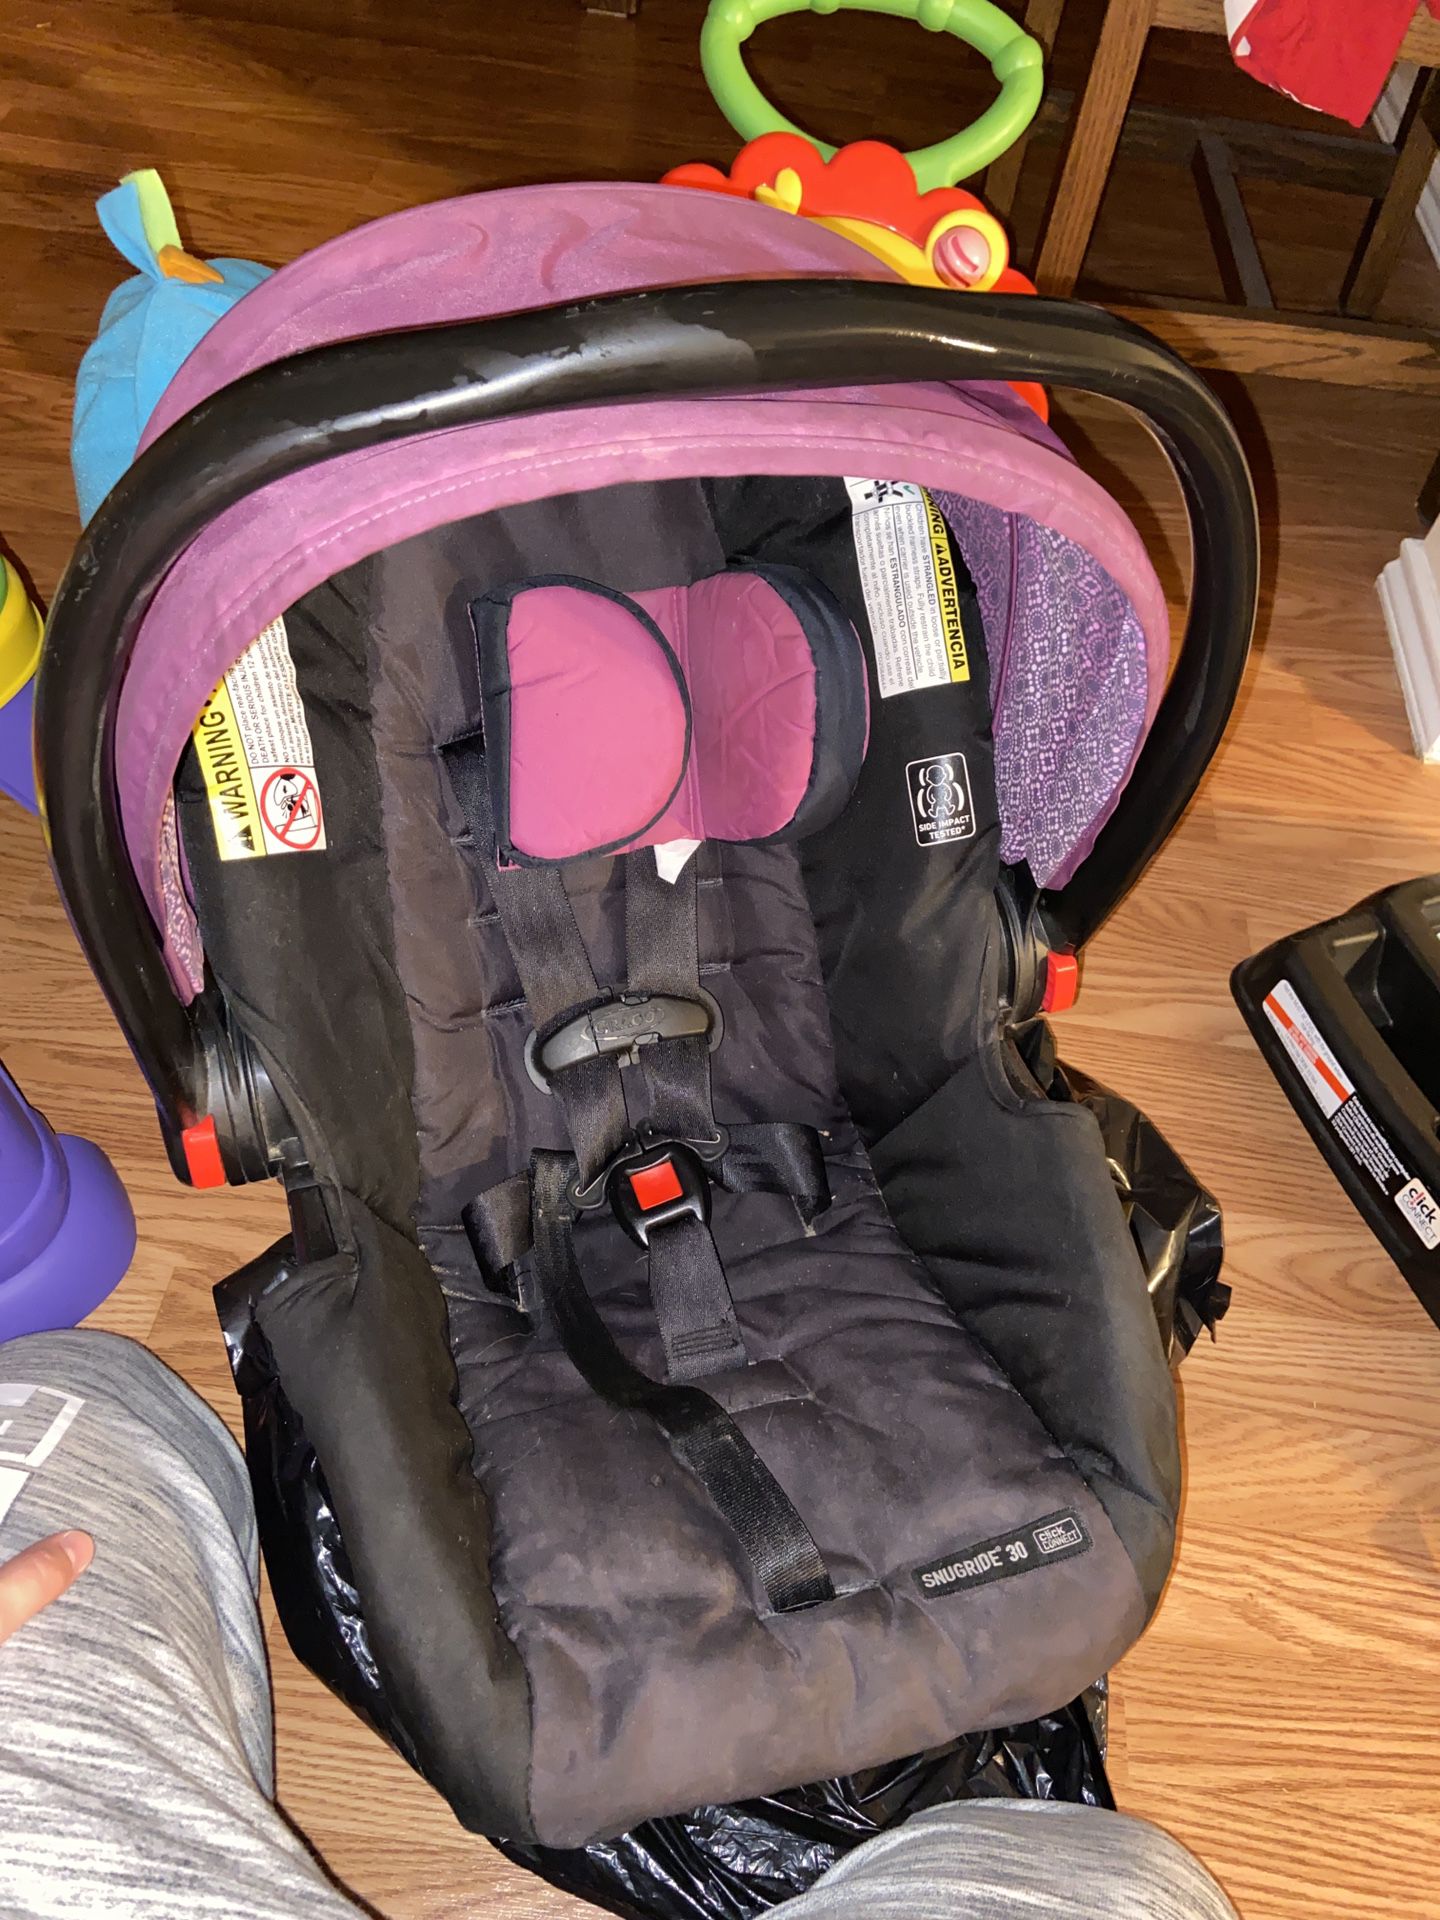 Graco snug ride 30 infant car seat